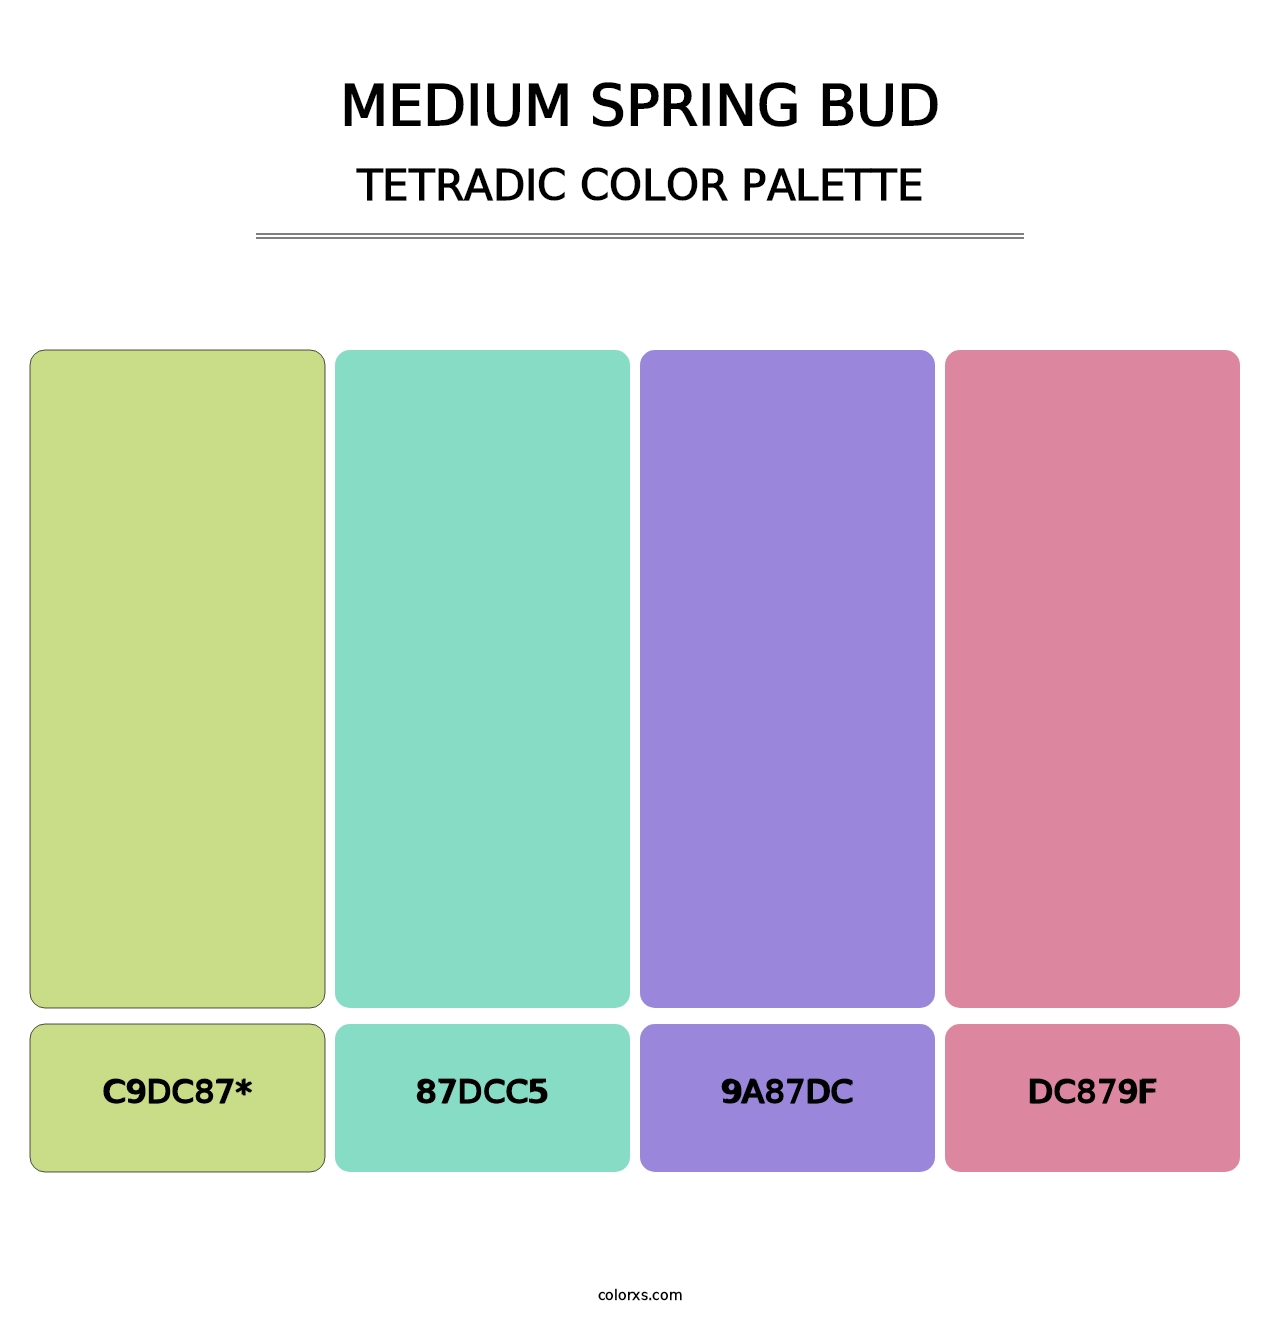 Medium Spring Bud - Tetradic Color Palette